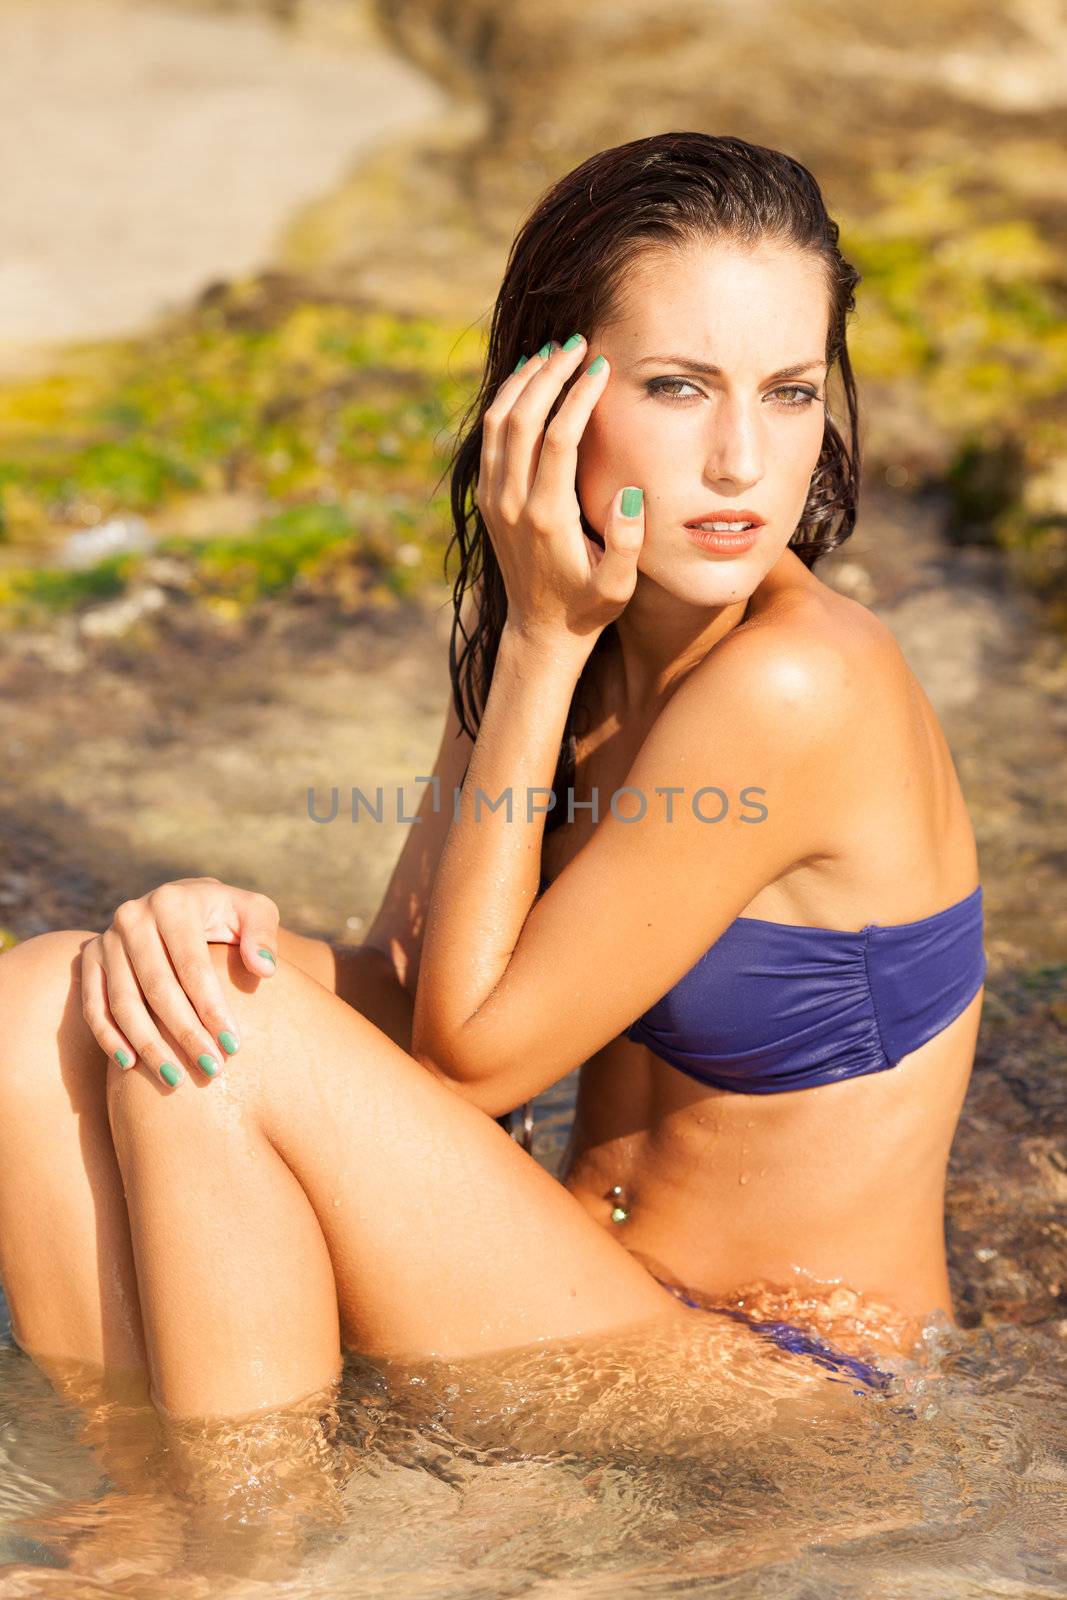 Portrait of sexy model enjoying a bath in the ocean by Lcrespi